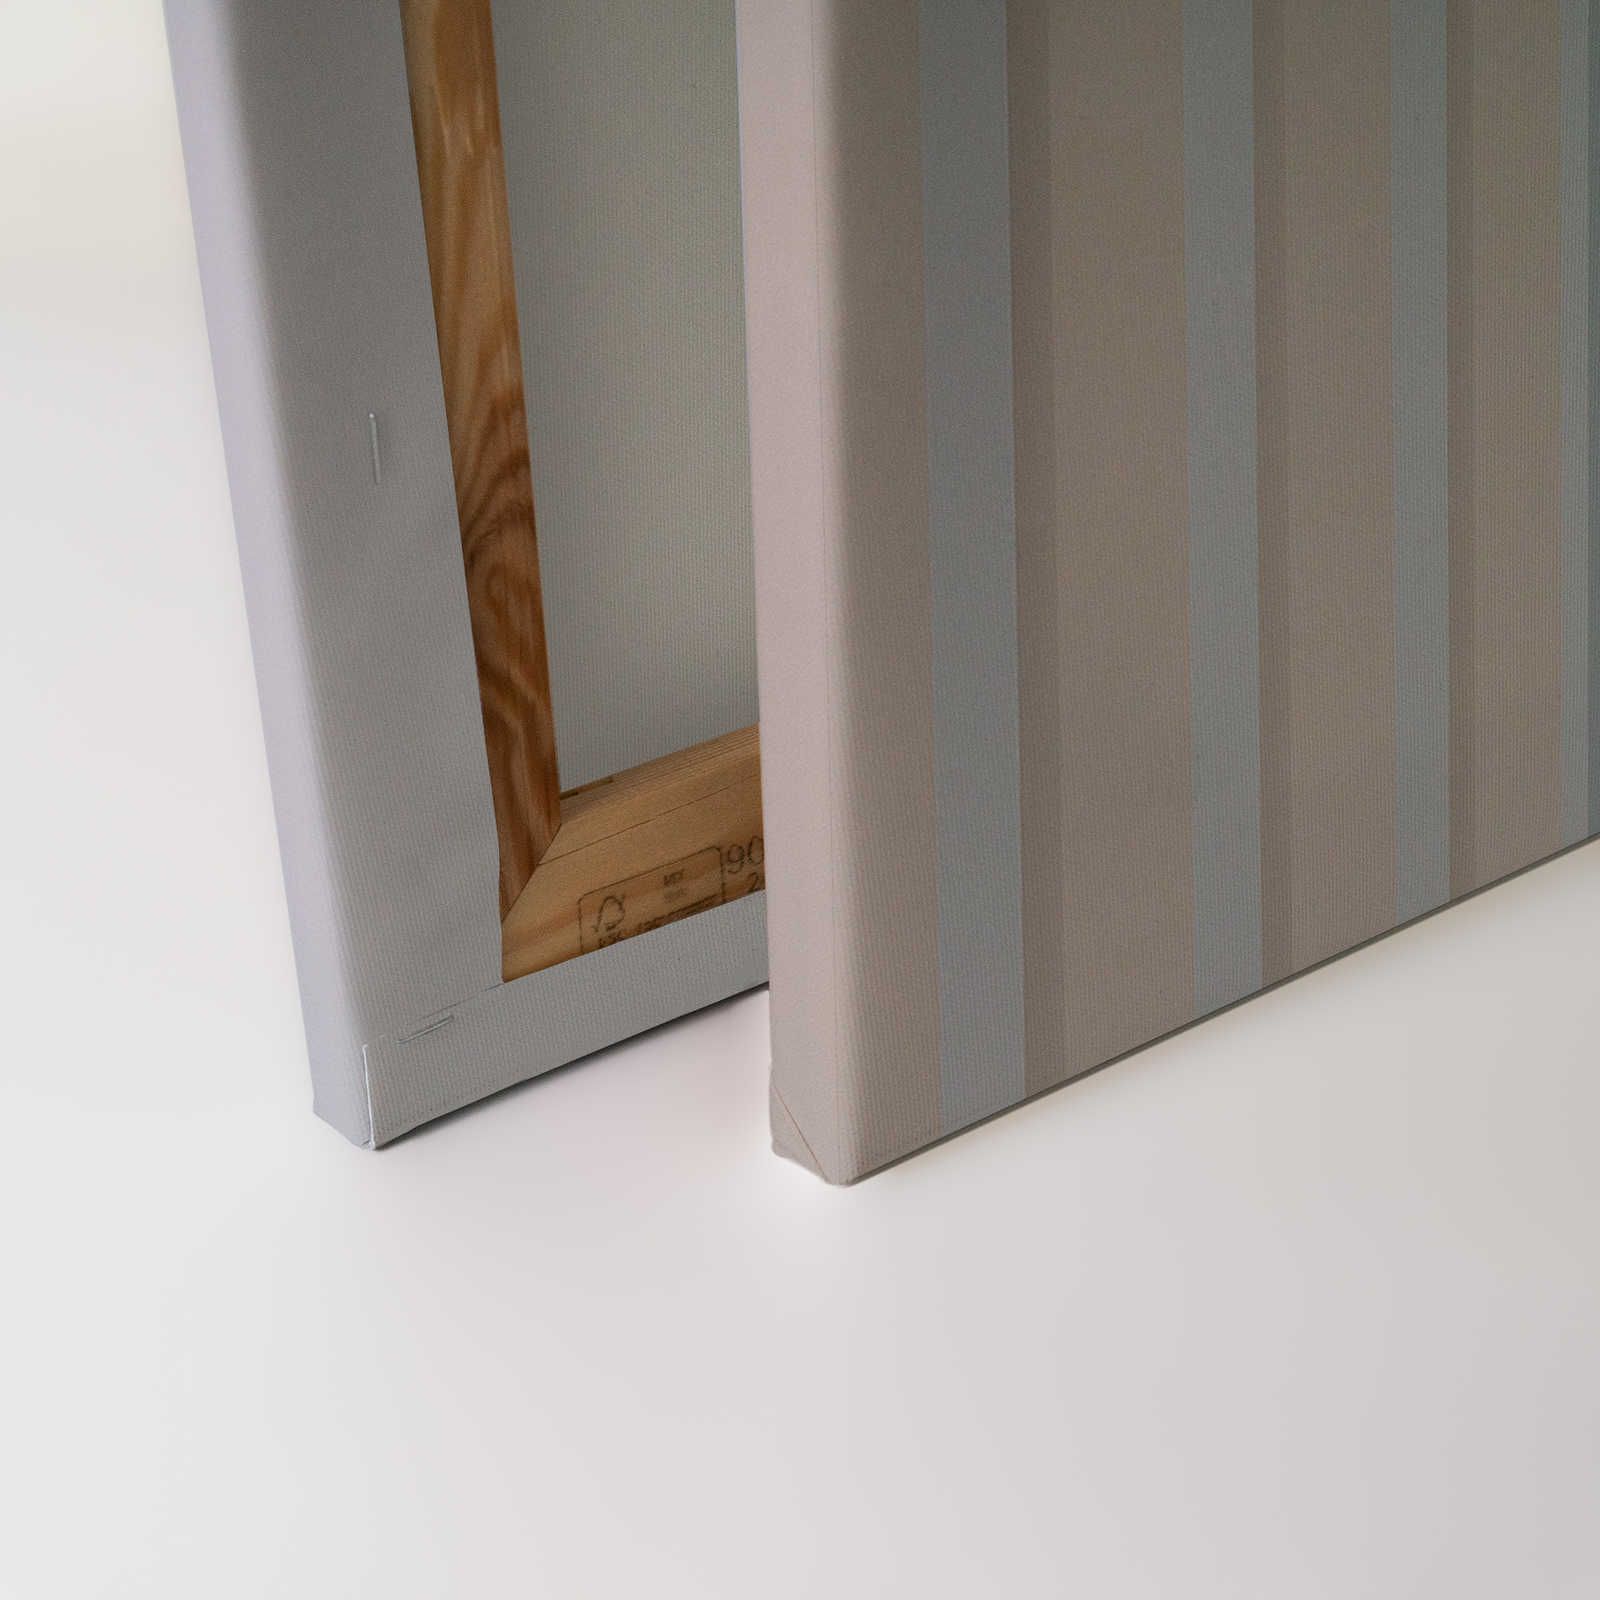             Illusion Room 2 - Canvas painting 3D Stripe Design in Blue & Grey - 0.90 m x 0.60 m
        